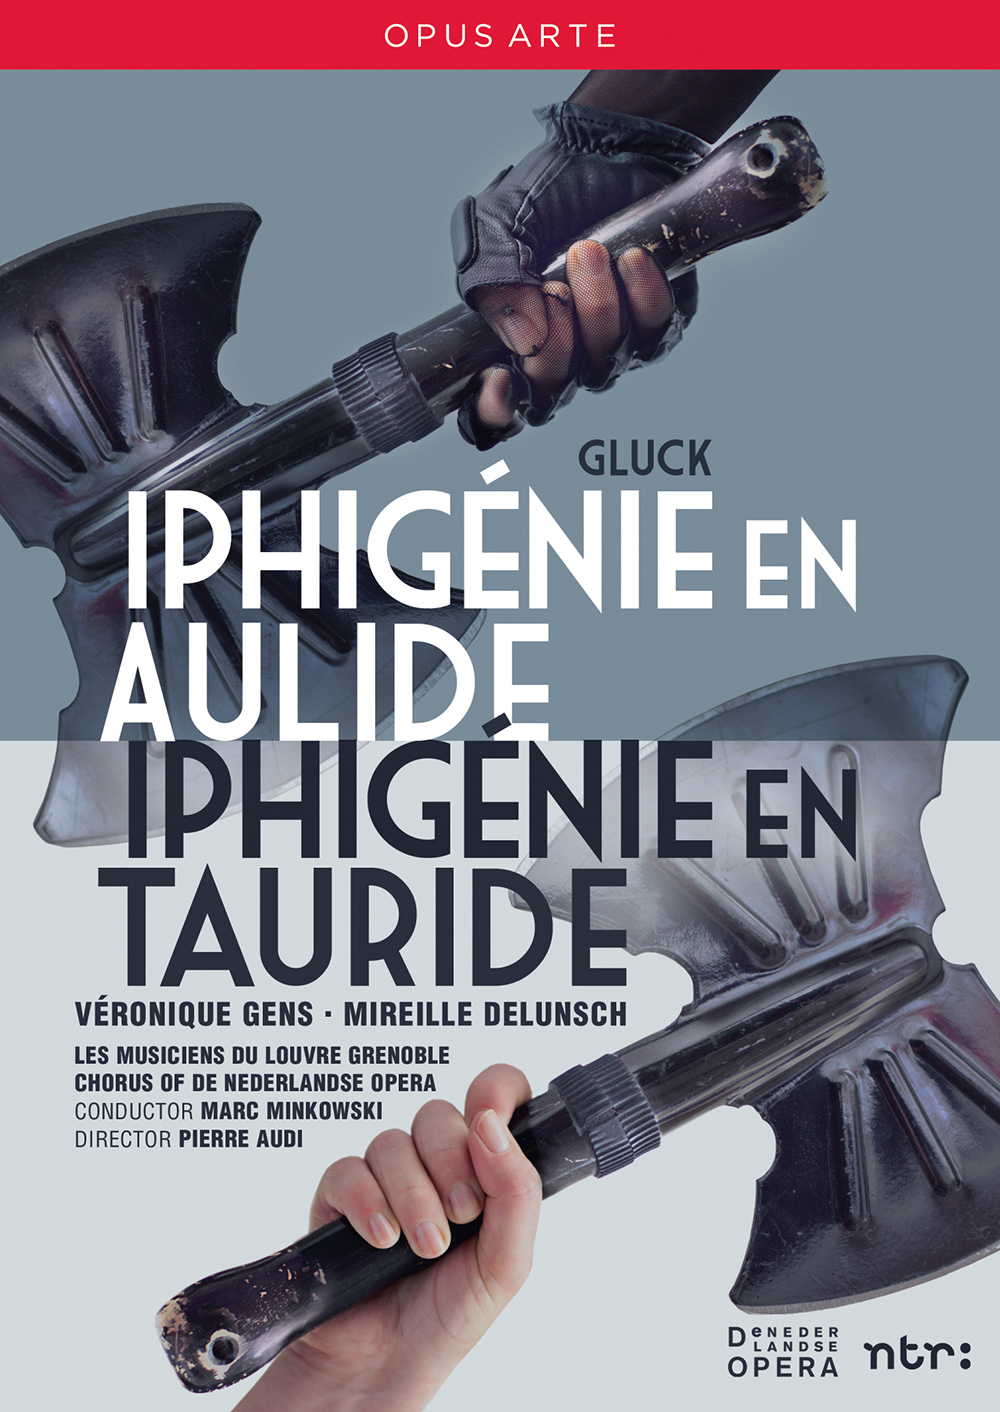 Gluck: Iphigénie en Tauride u0026 Iphigénie en Aulide | Get high quality  audiovisual recordings from Opus Arte.